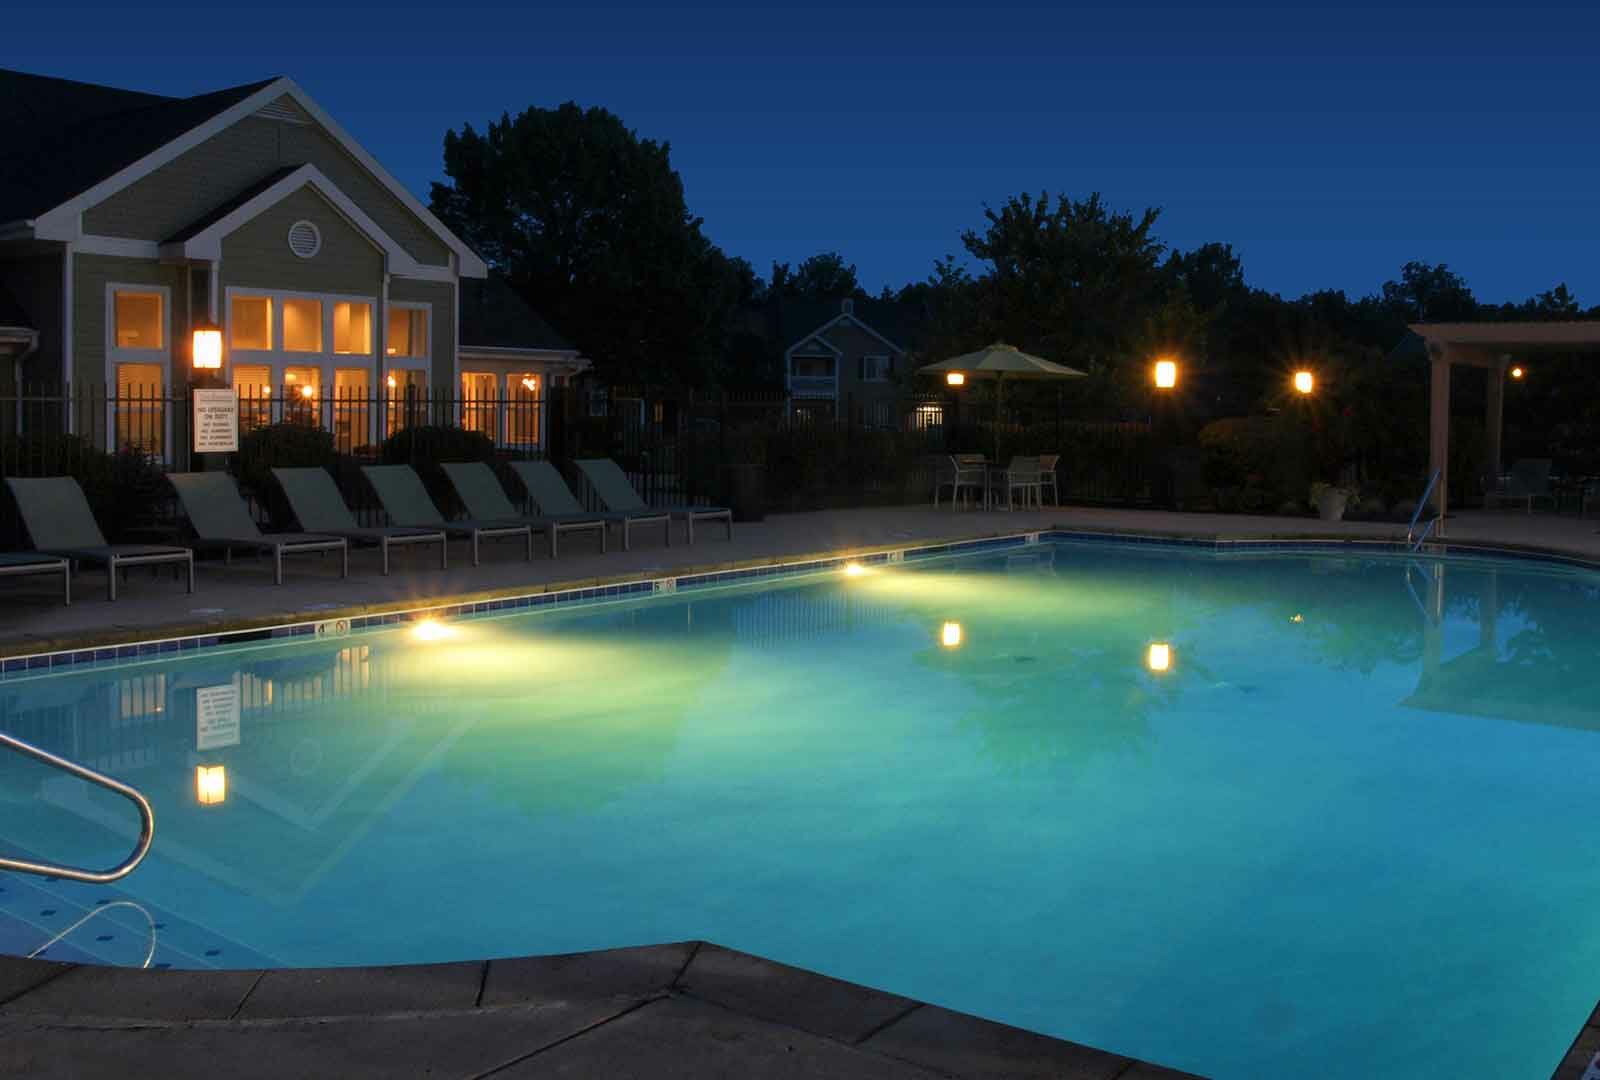 Swimming pool lit at night at Reserve at Miller Farm.